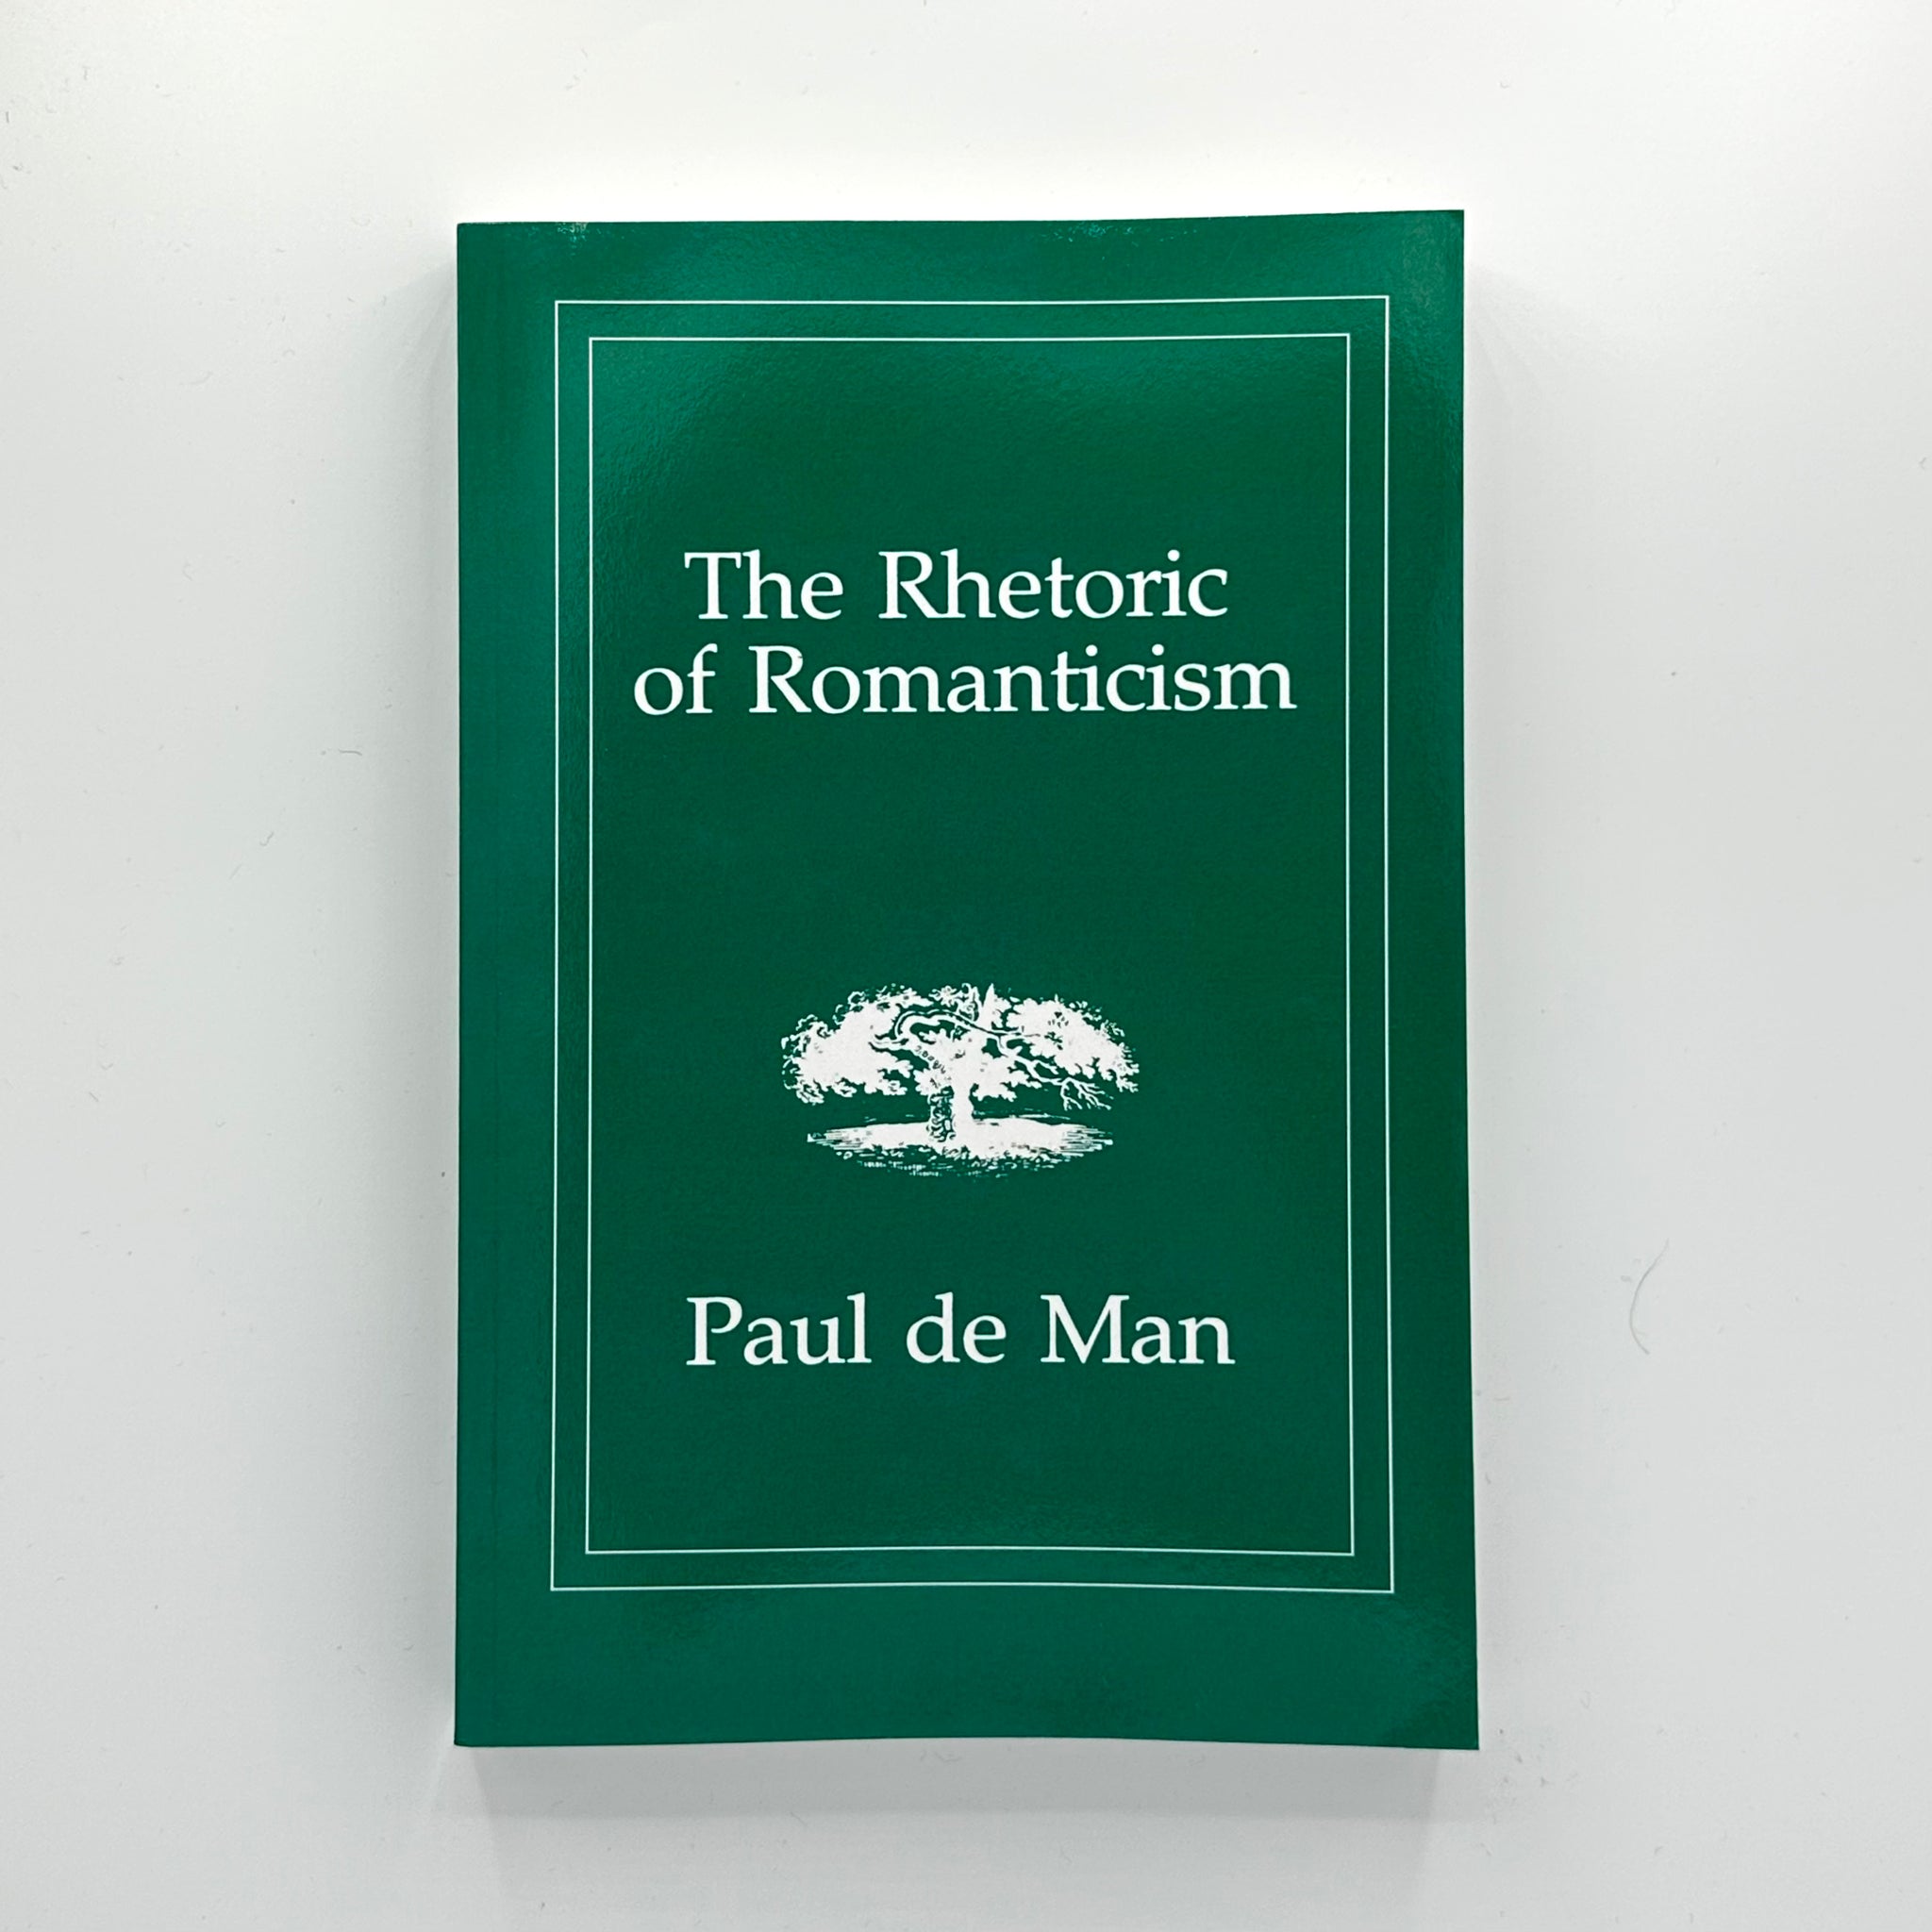 Paul de Man—The Rhetoric of Romanticism